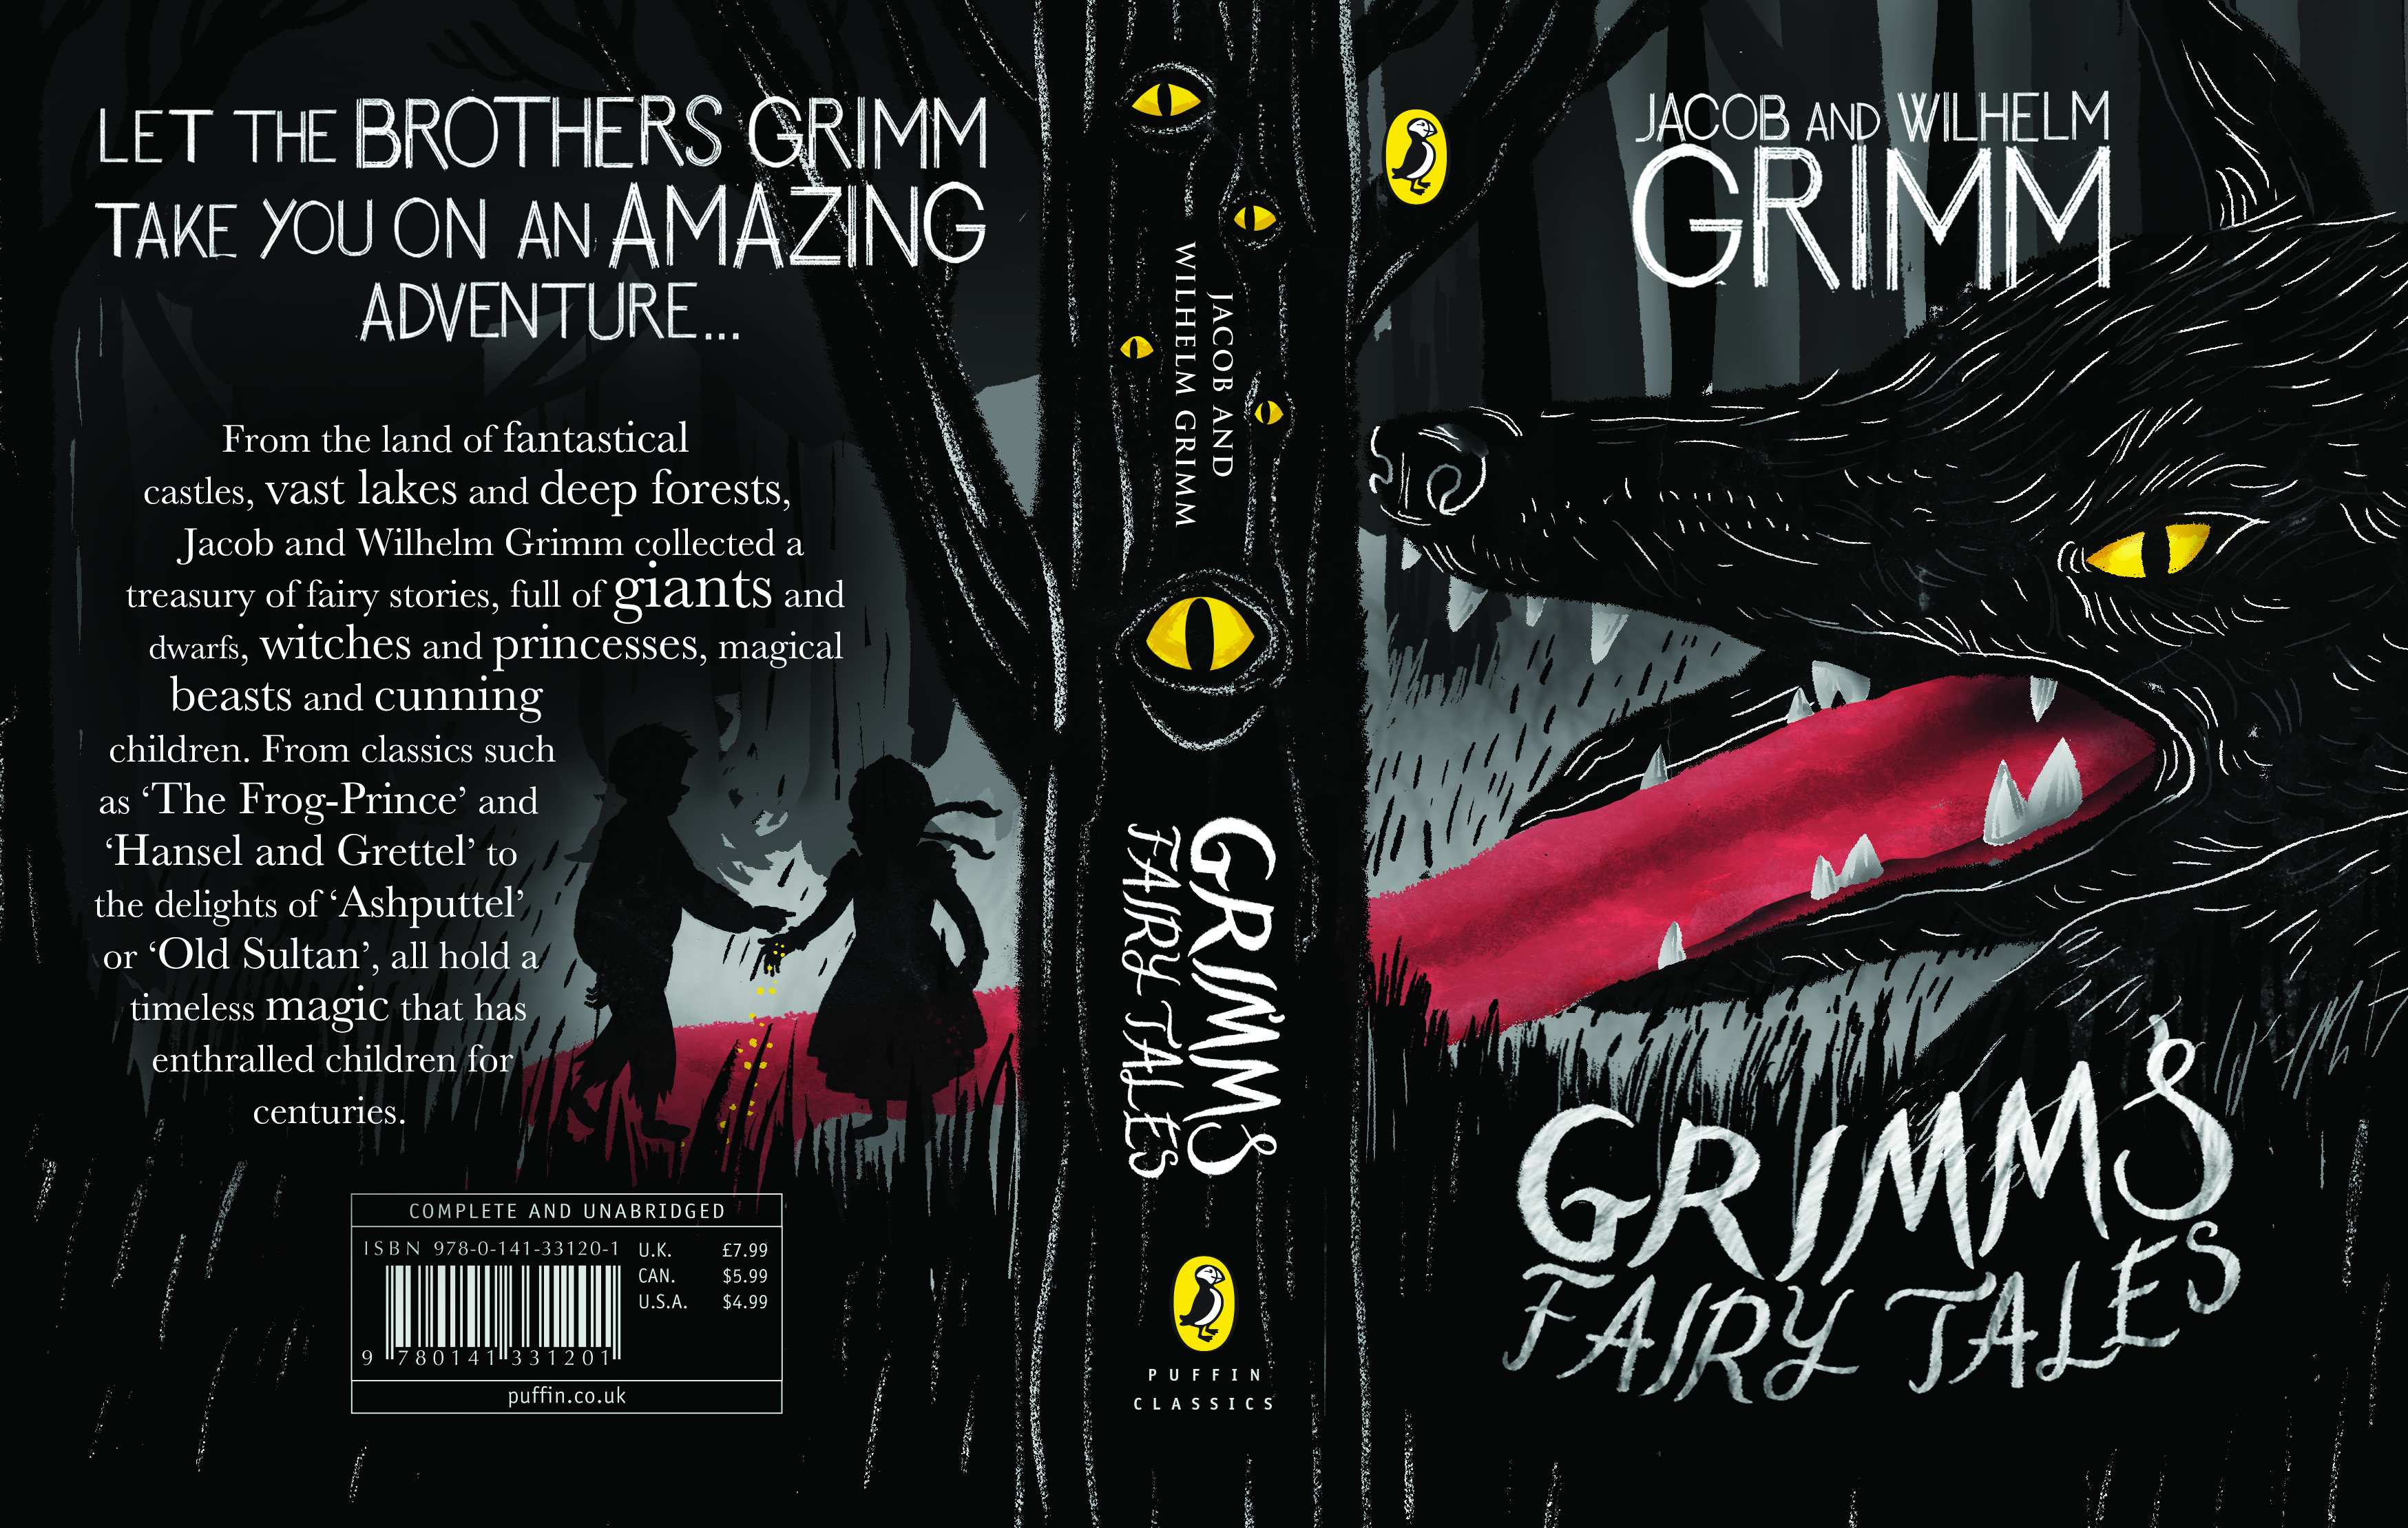 Grimm's Fairy Tales book cover design